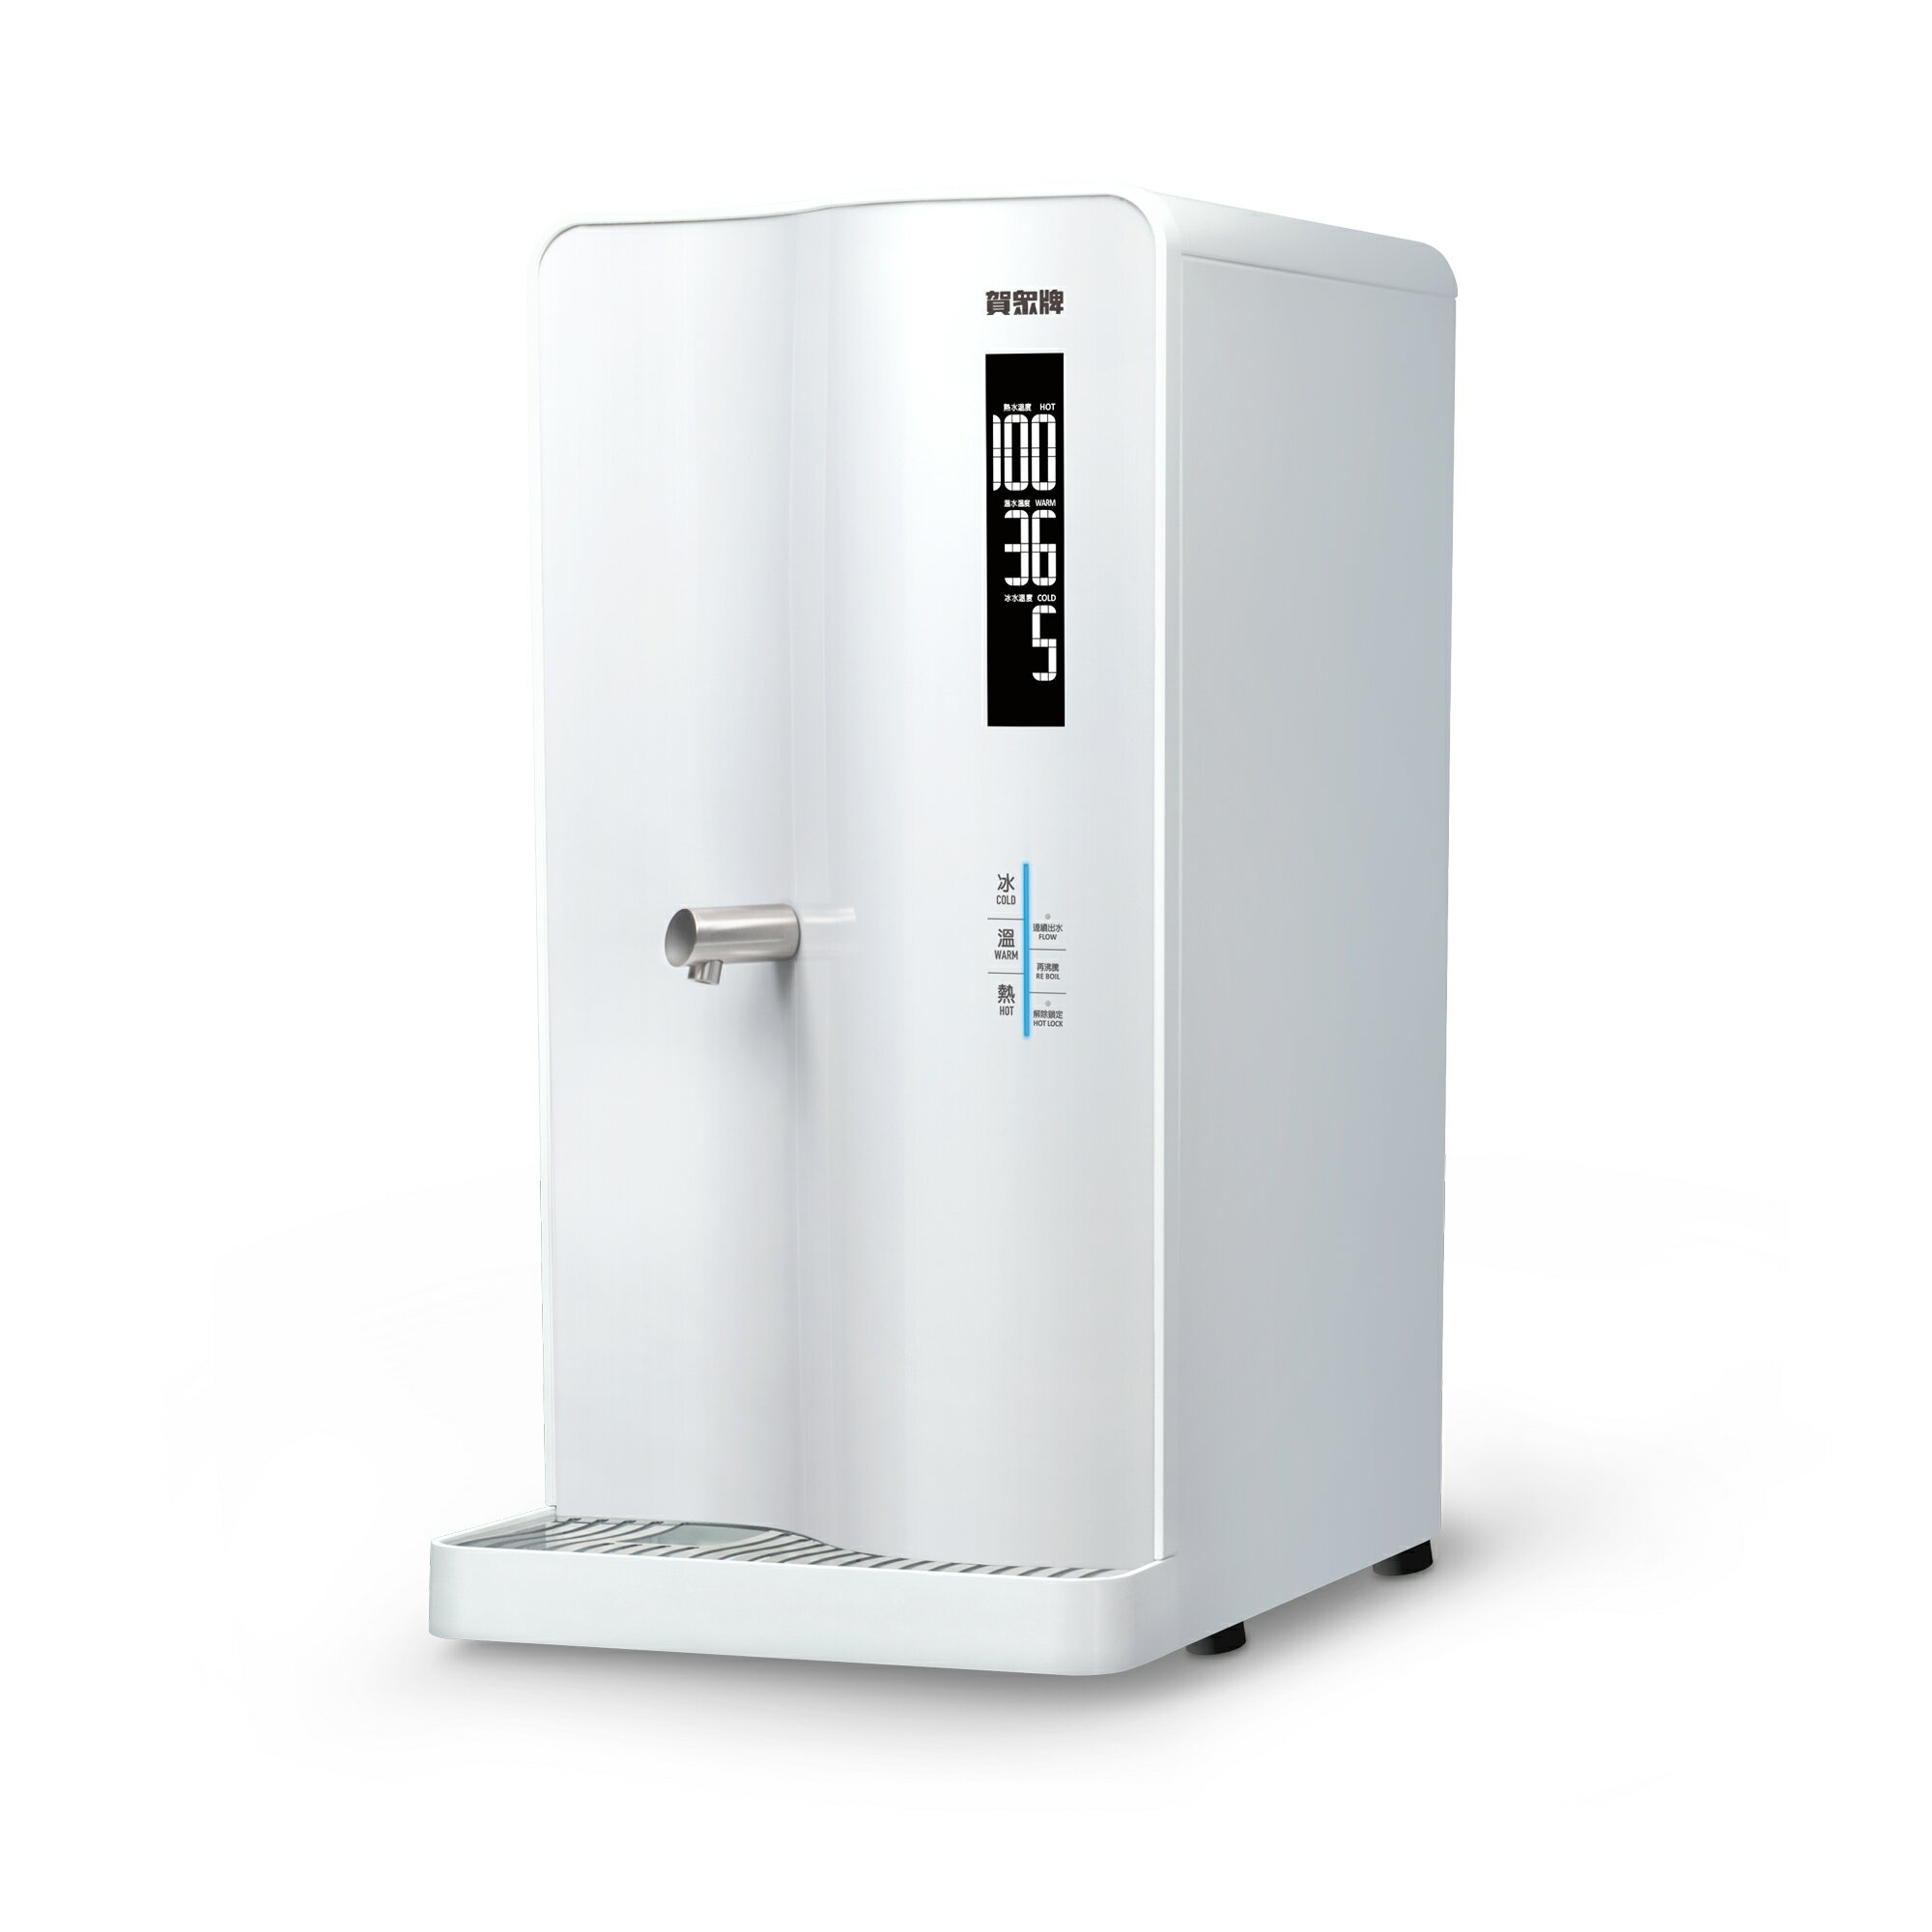 【MIT台灣製造】【賀眾牌】【含標準安裝】【智能程控殺菌飲水機】 UN-8003AW 冰溫熱 保溫 智能